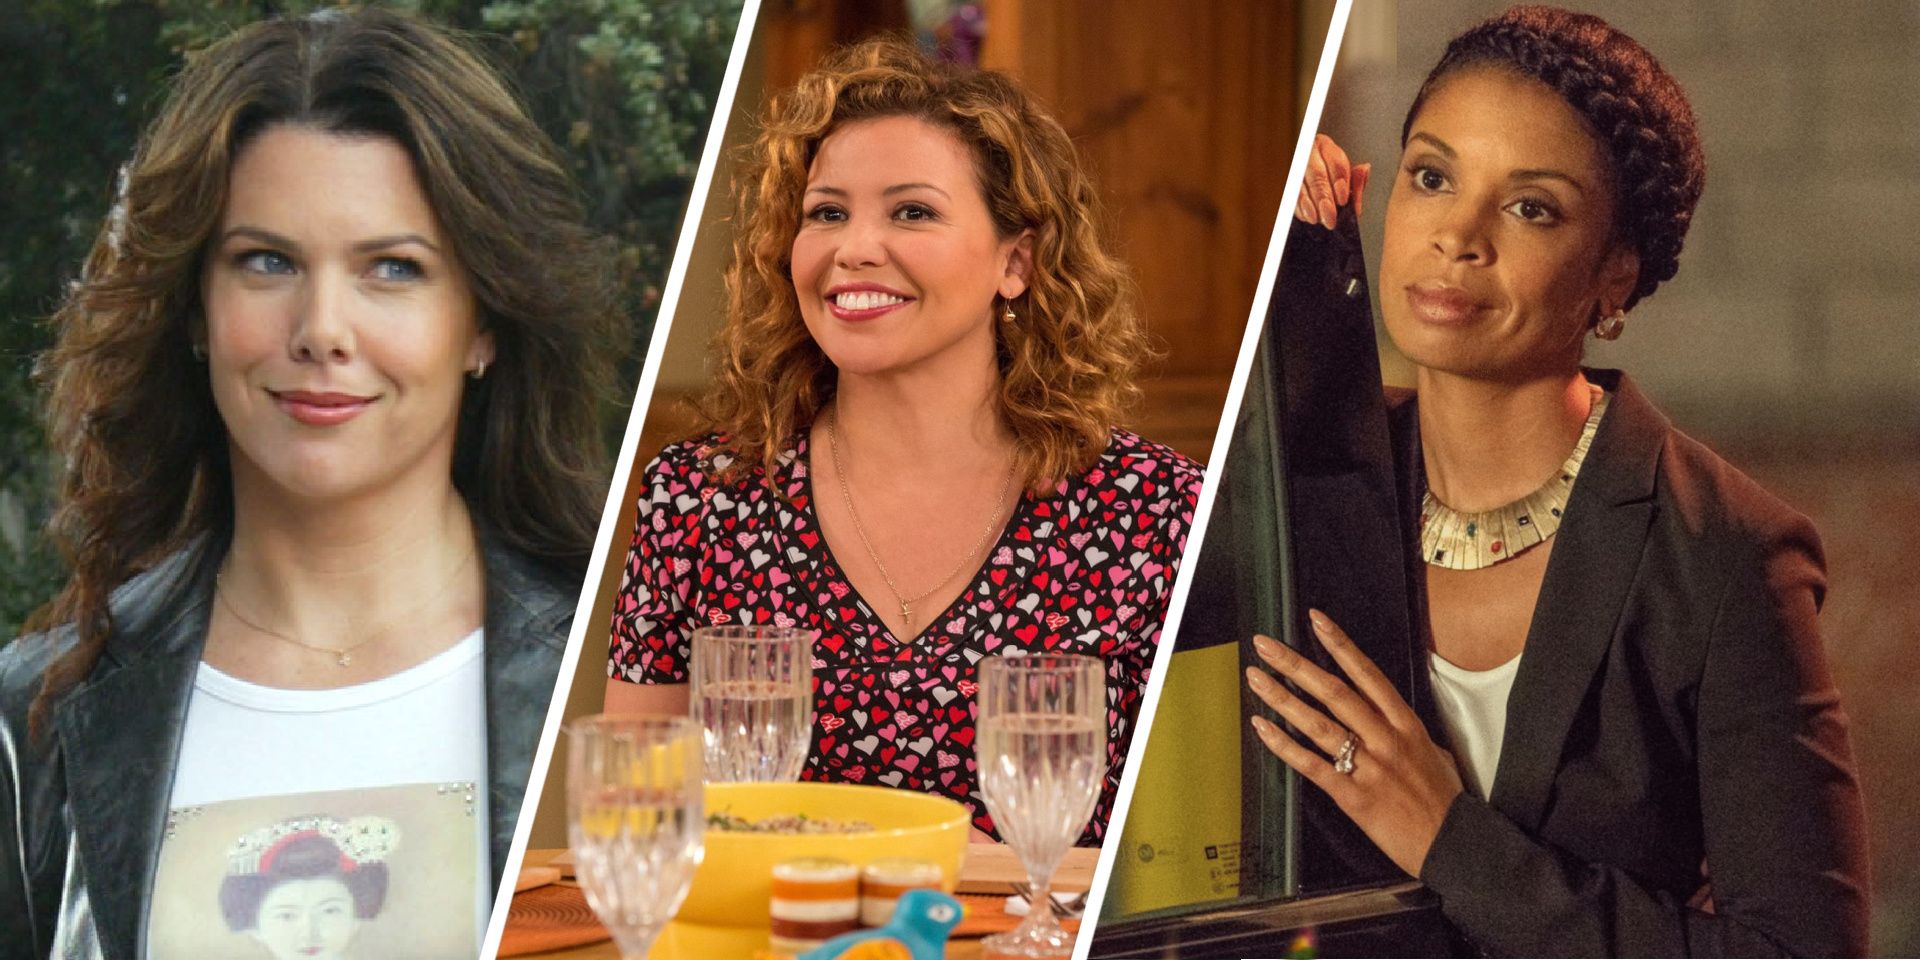 10 best TV moms feature image of Lorelai Gilmore, Penelope Alvarez, and Beth Pearson